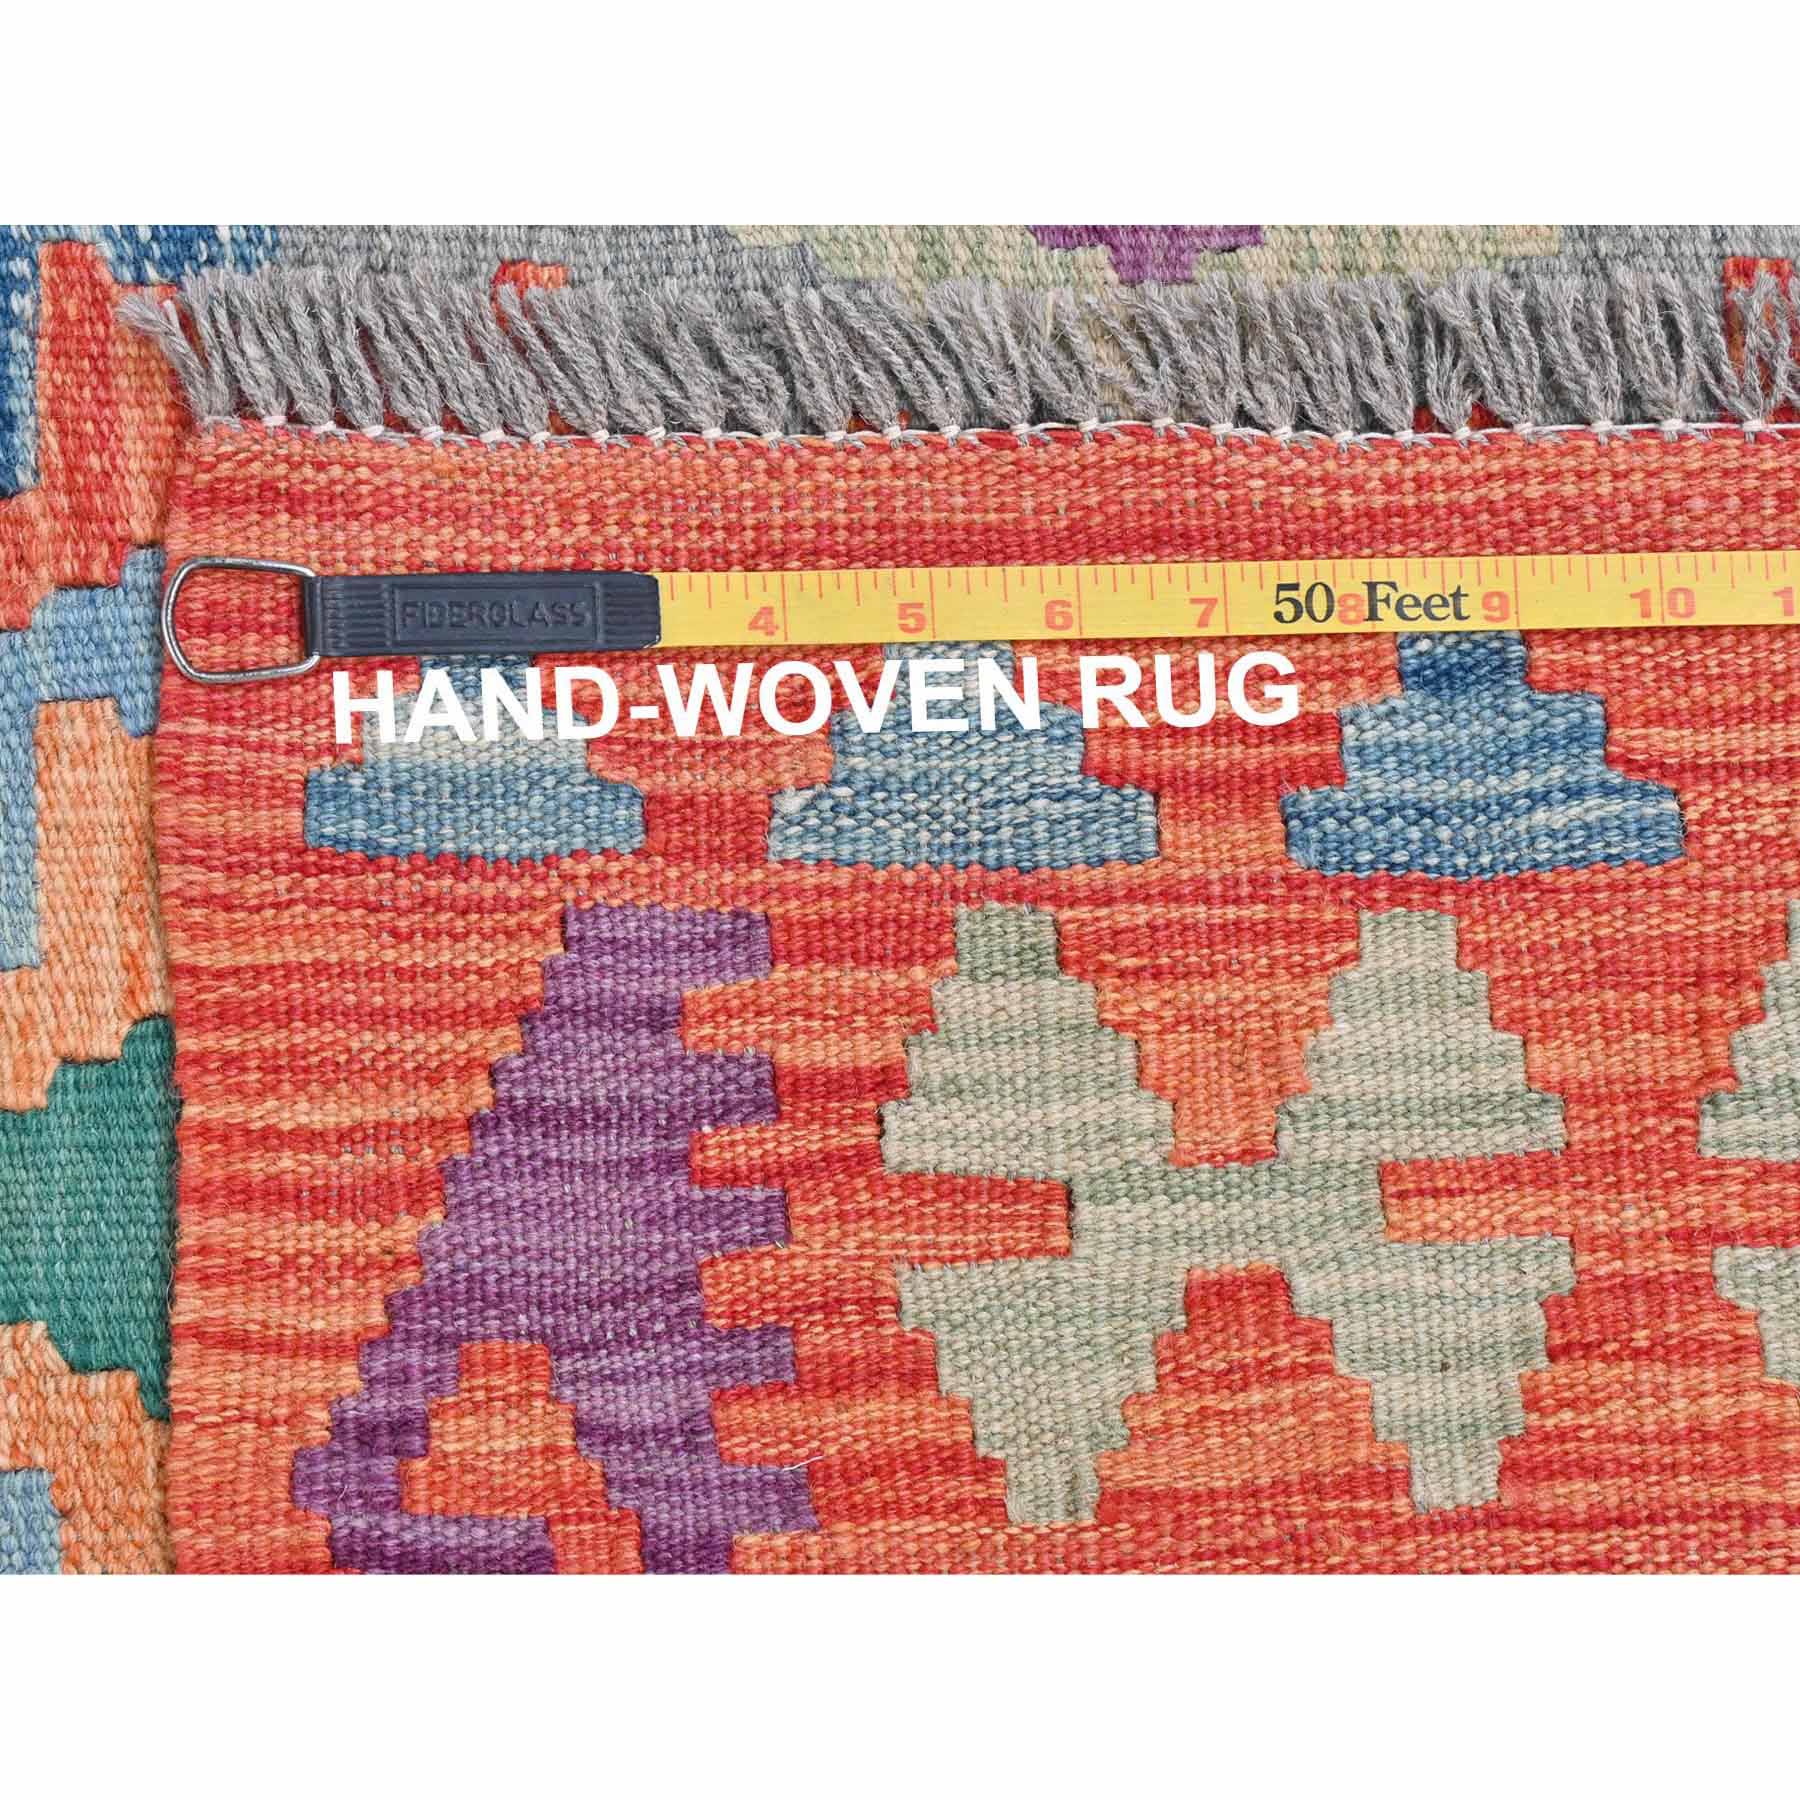 Flat-Weave-Hand-Woven-Rug-409025